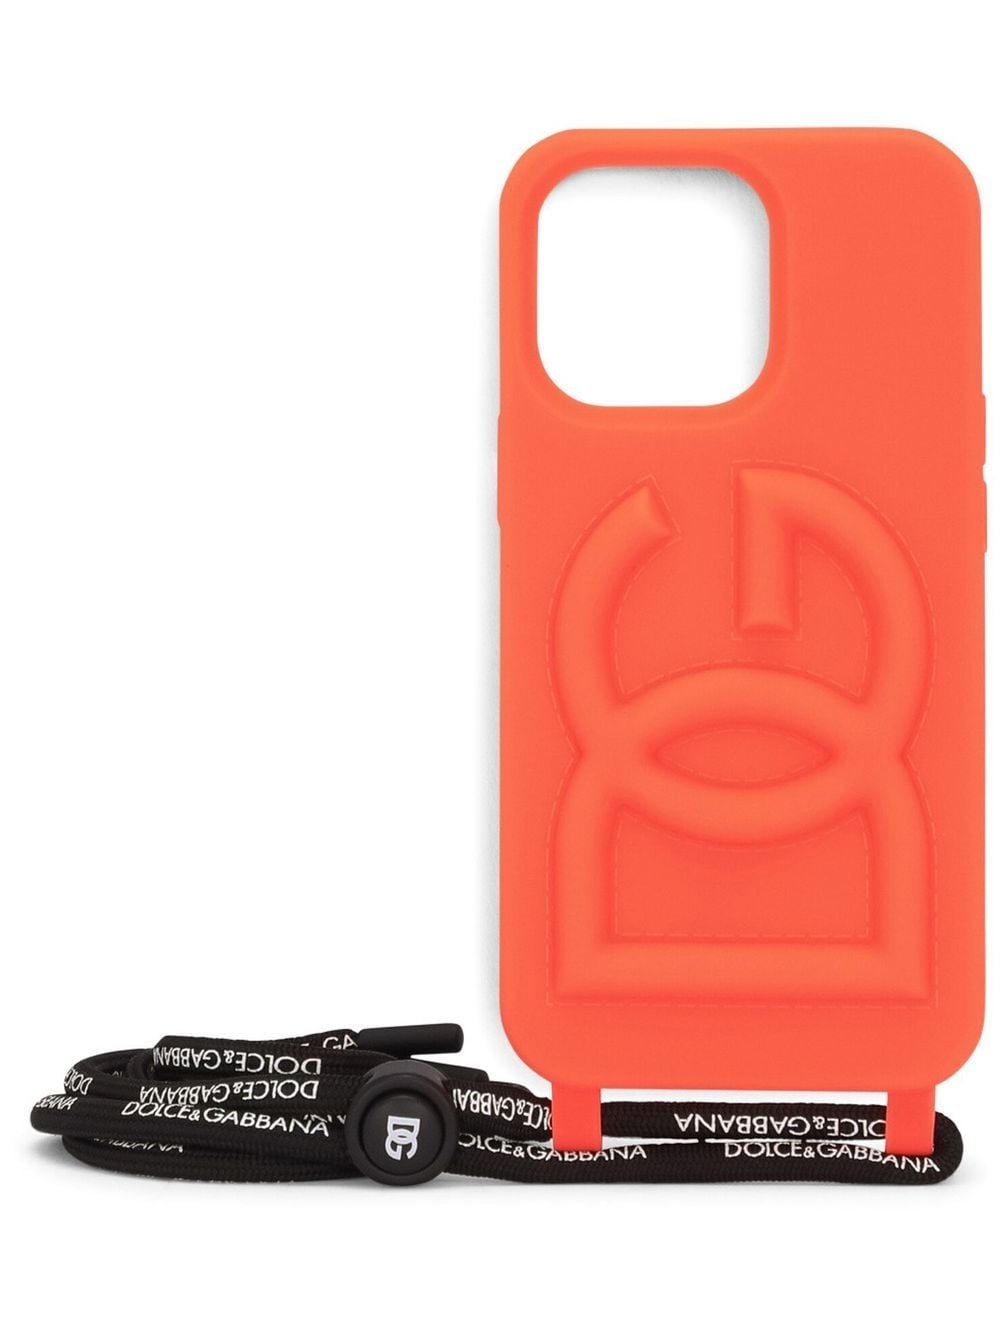 3D-logo Iphone Pro Max case - 1